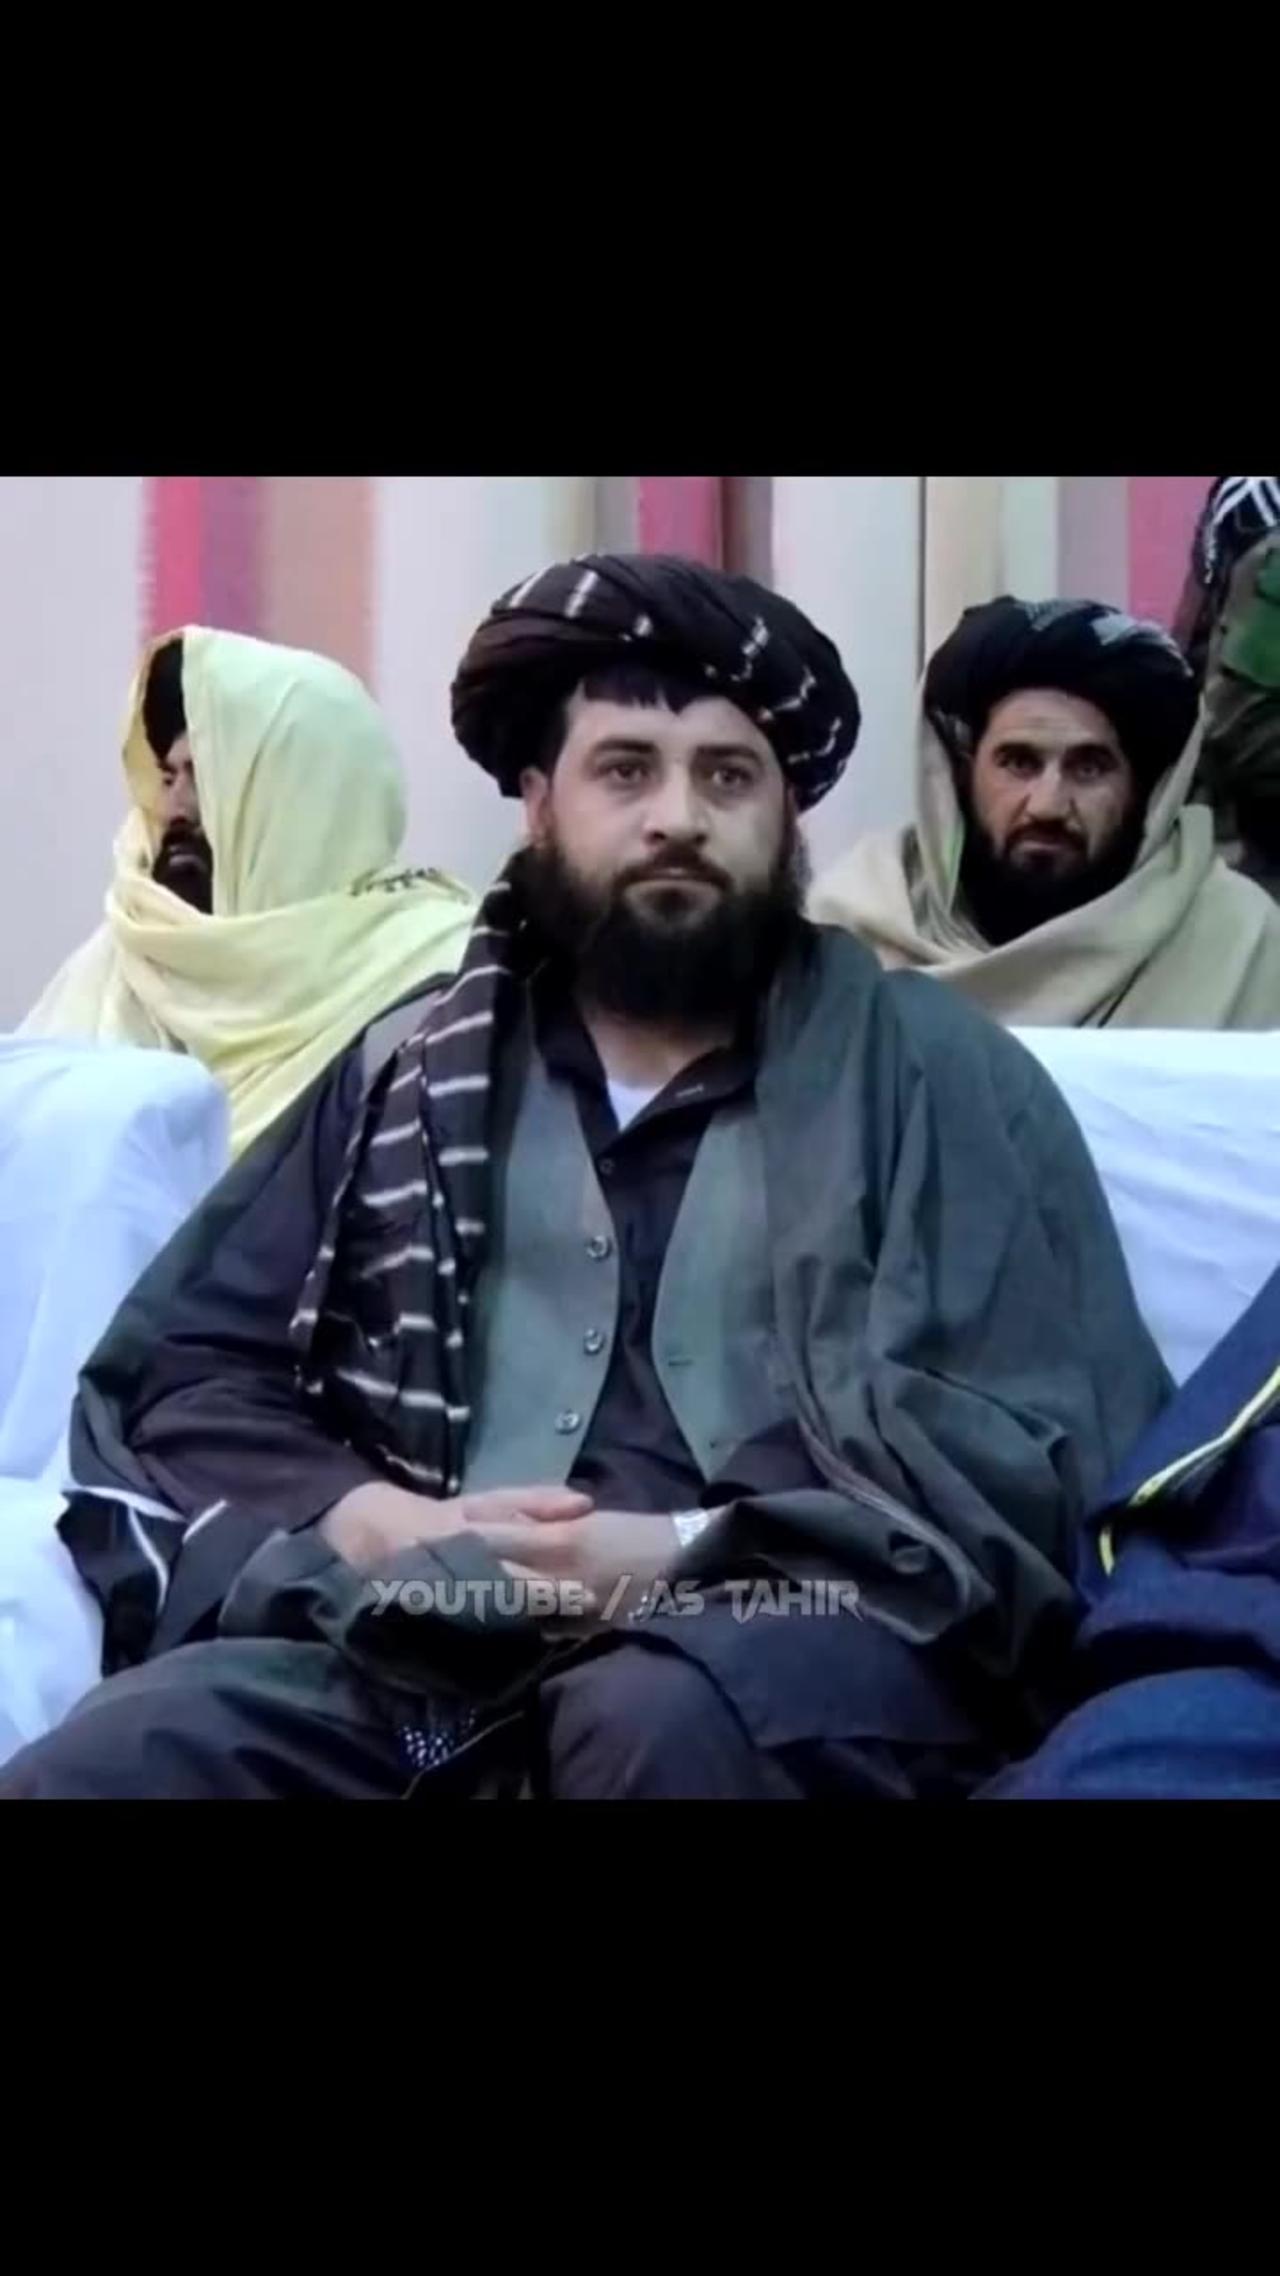 AFGHANISTAN TALIBAN LEADER